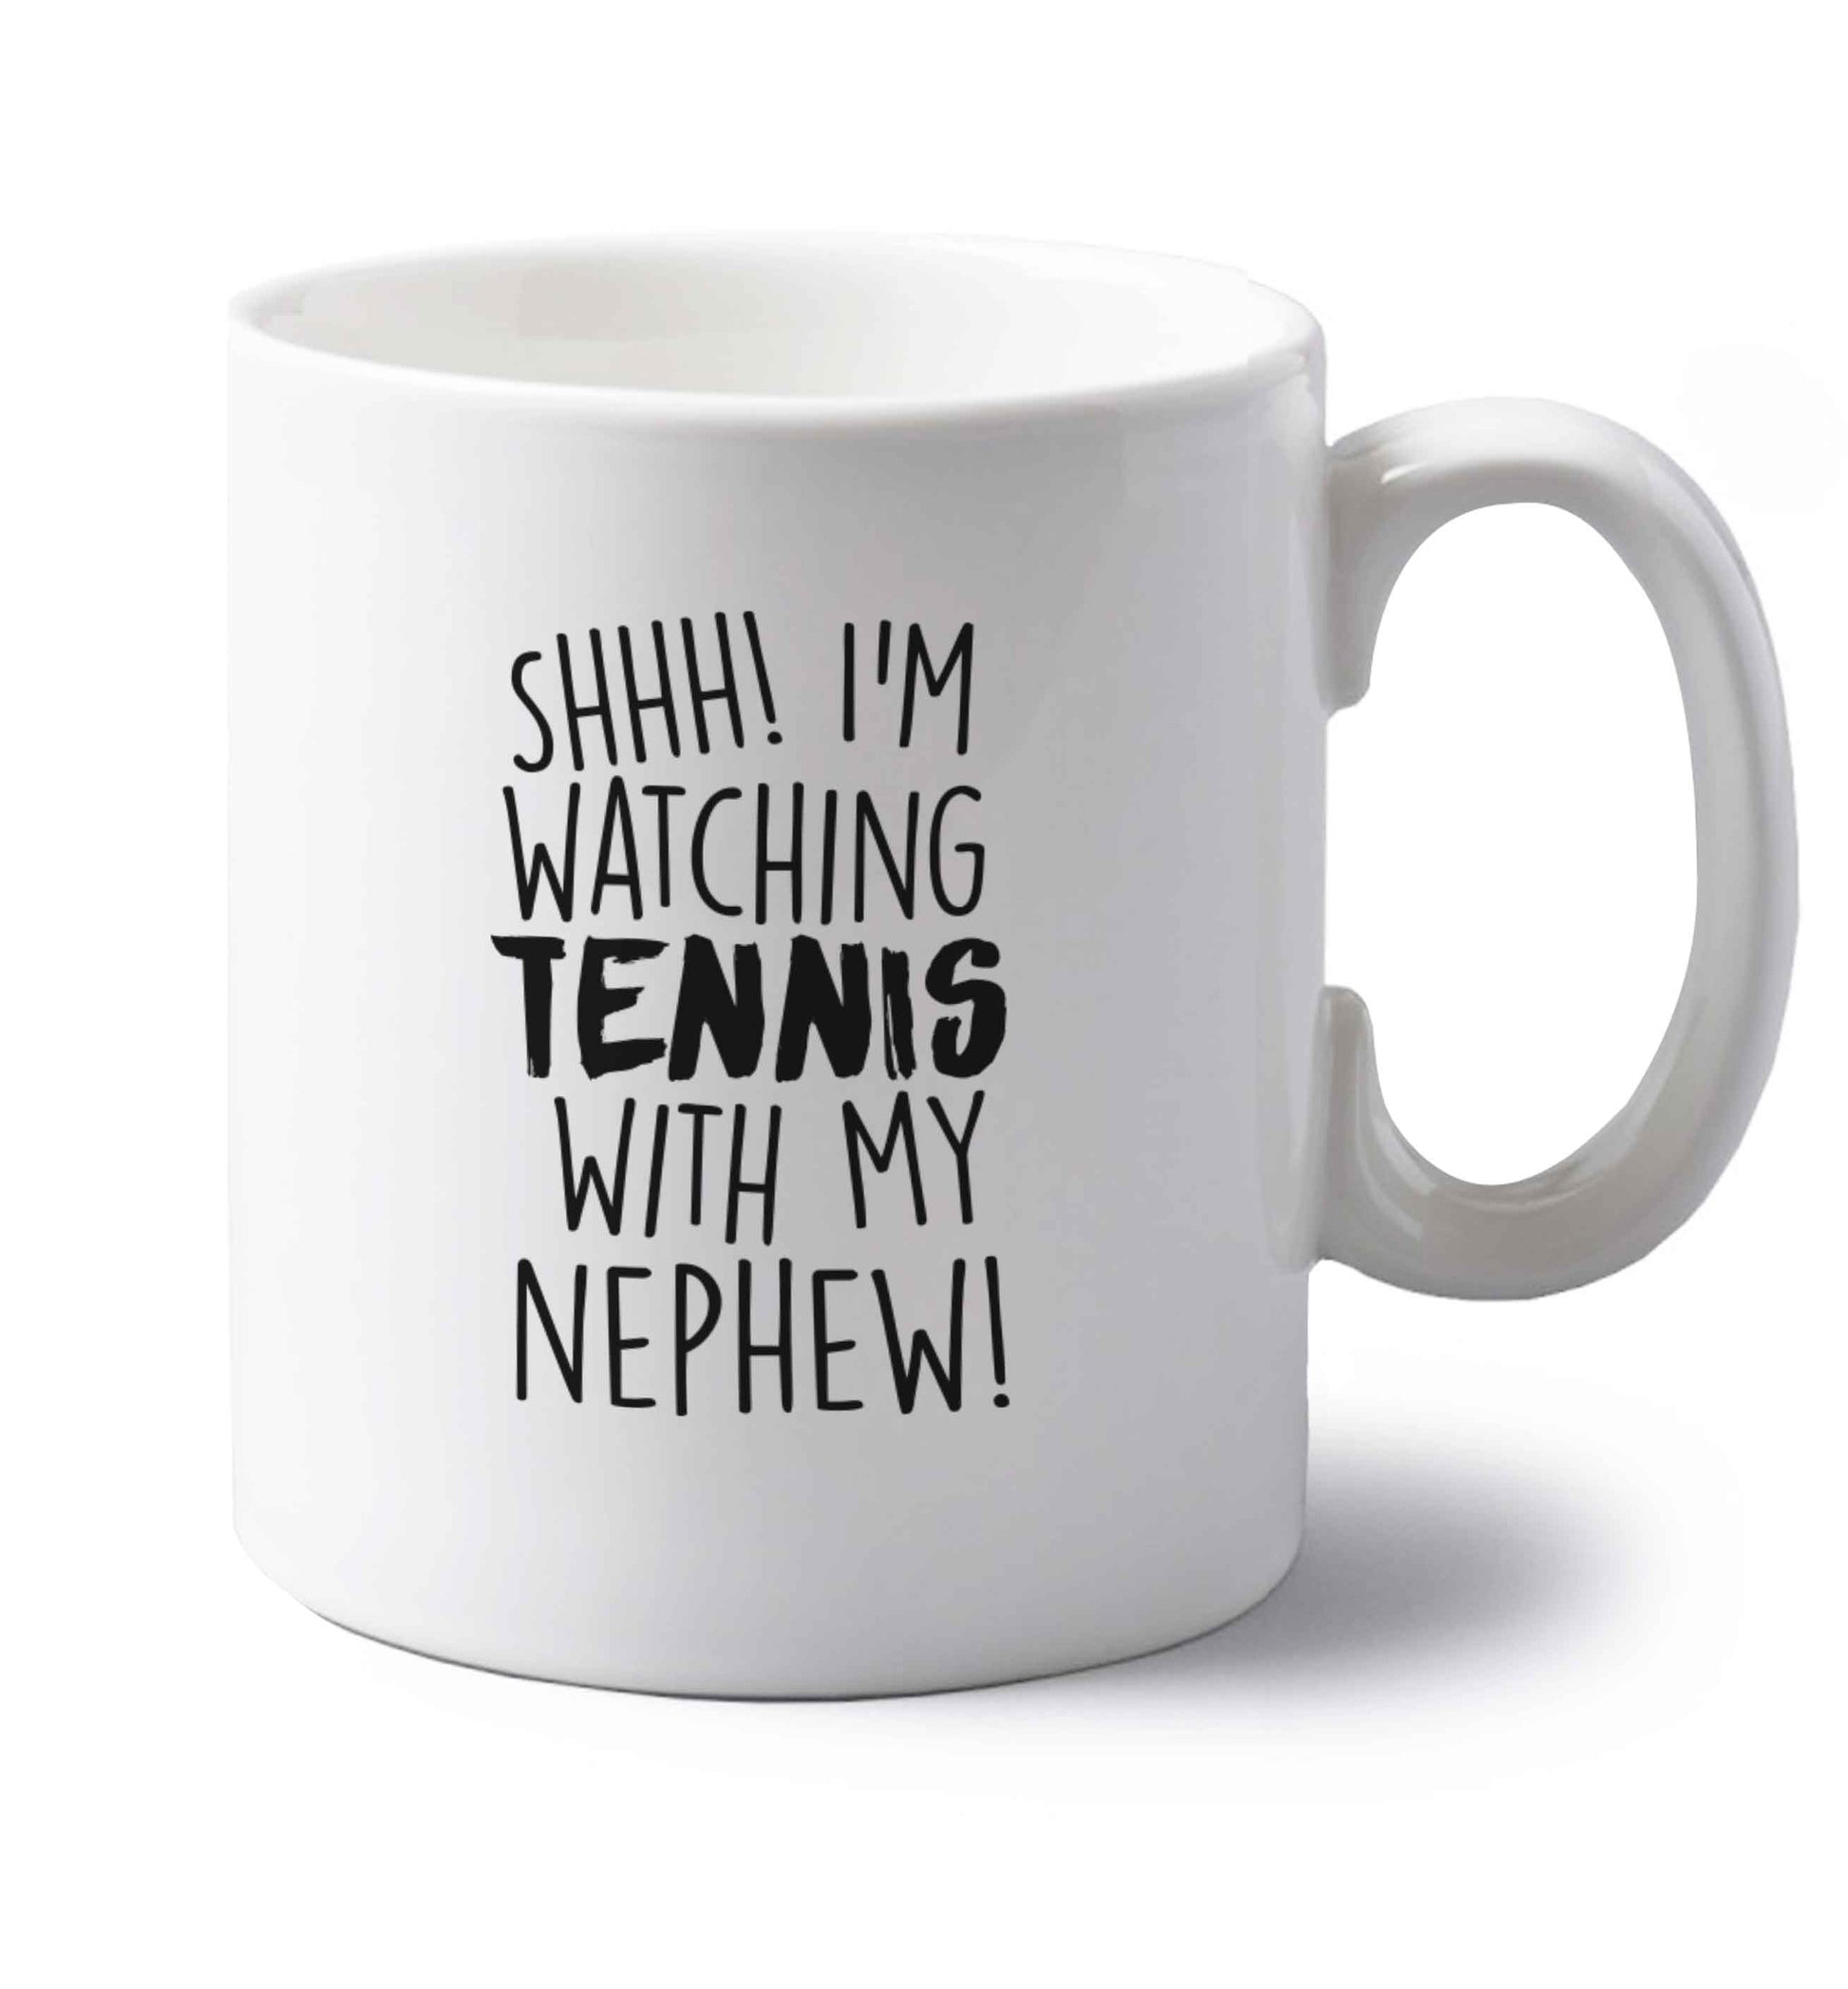 Shh! I'm watching tennis with my nephew! left handed white ceramic mug 